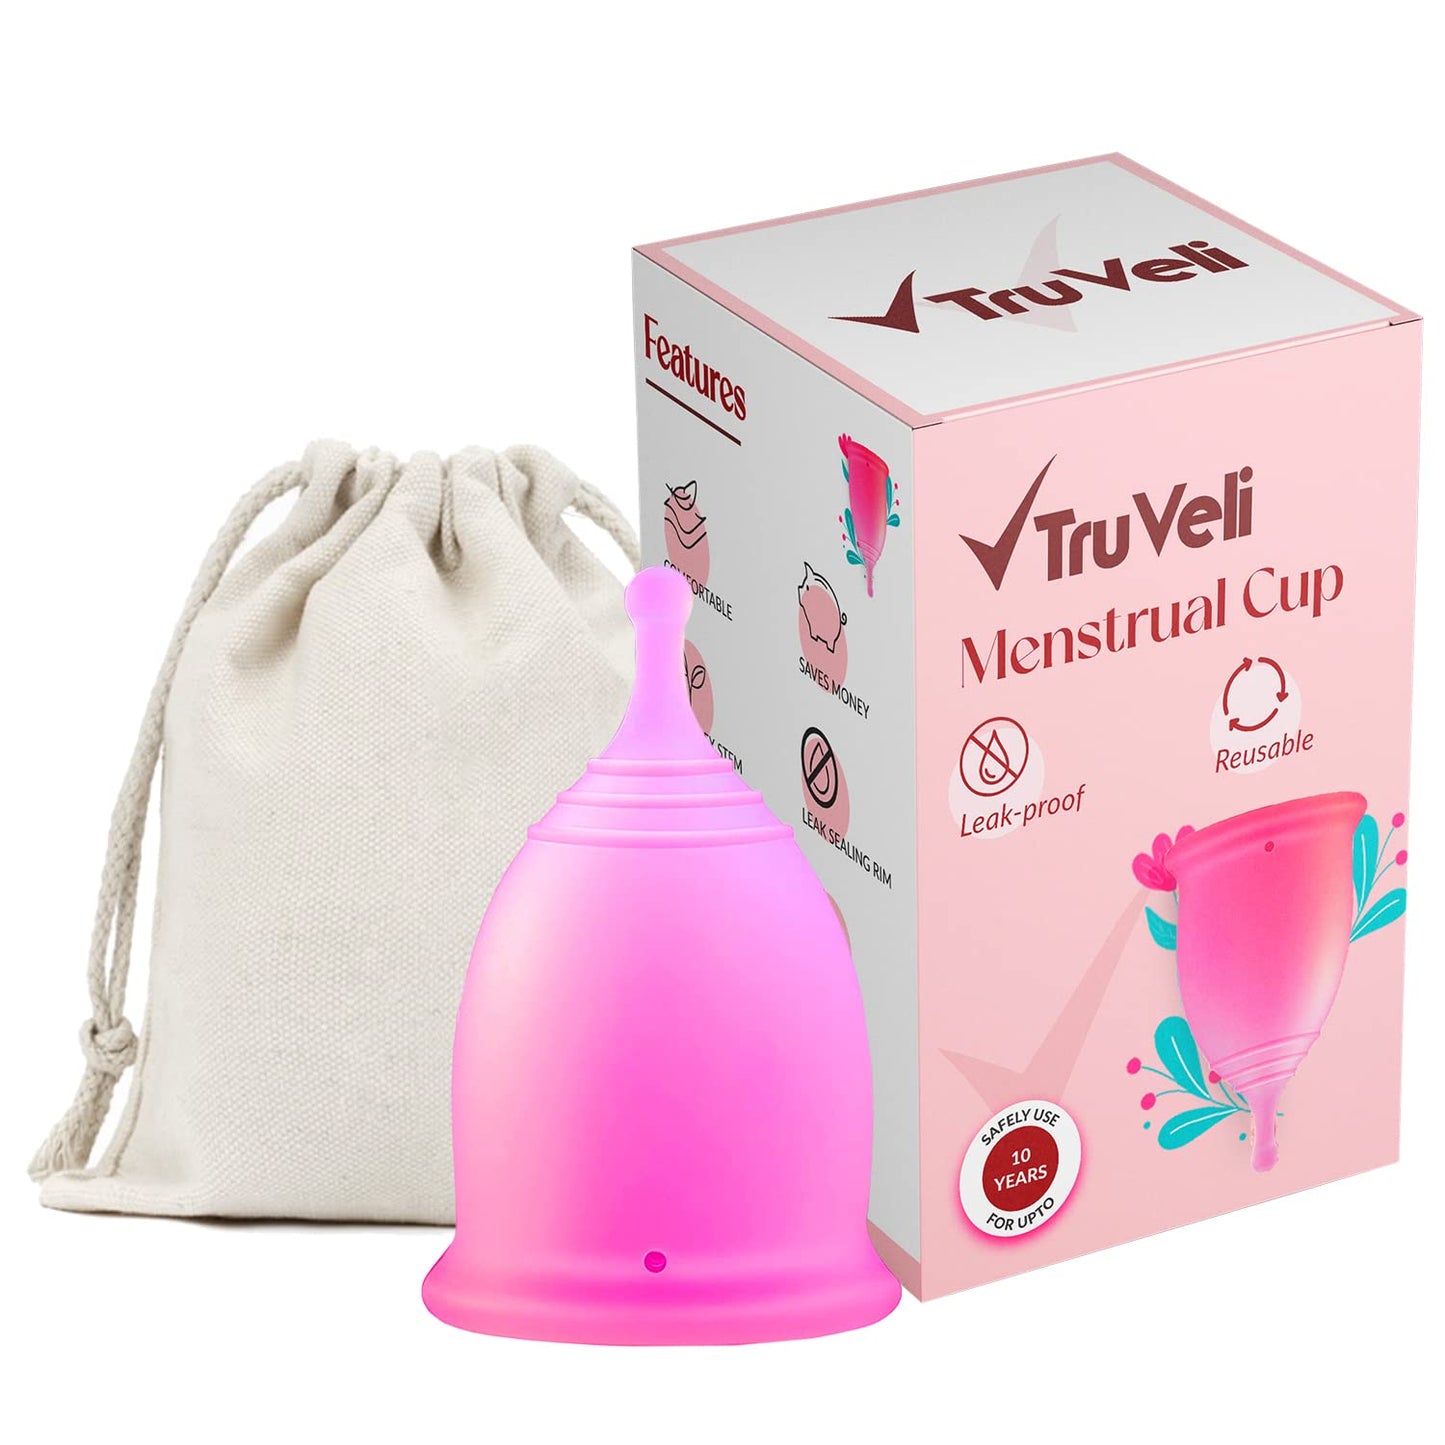 Reusable Menstrual Cup (Large Size)